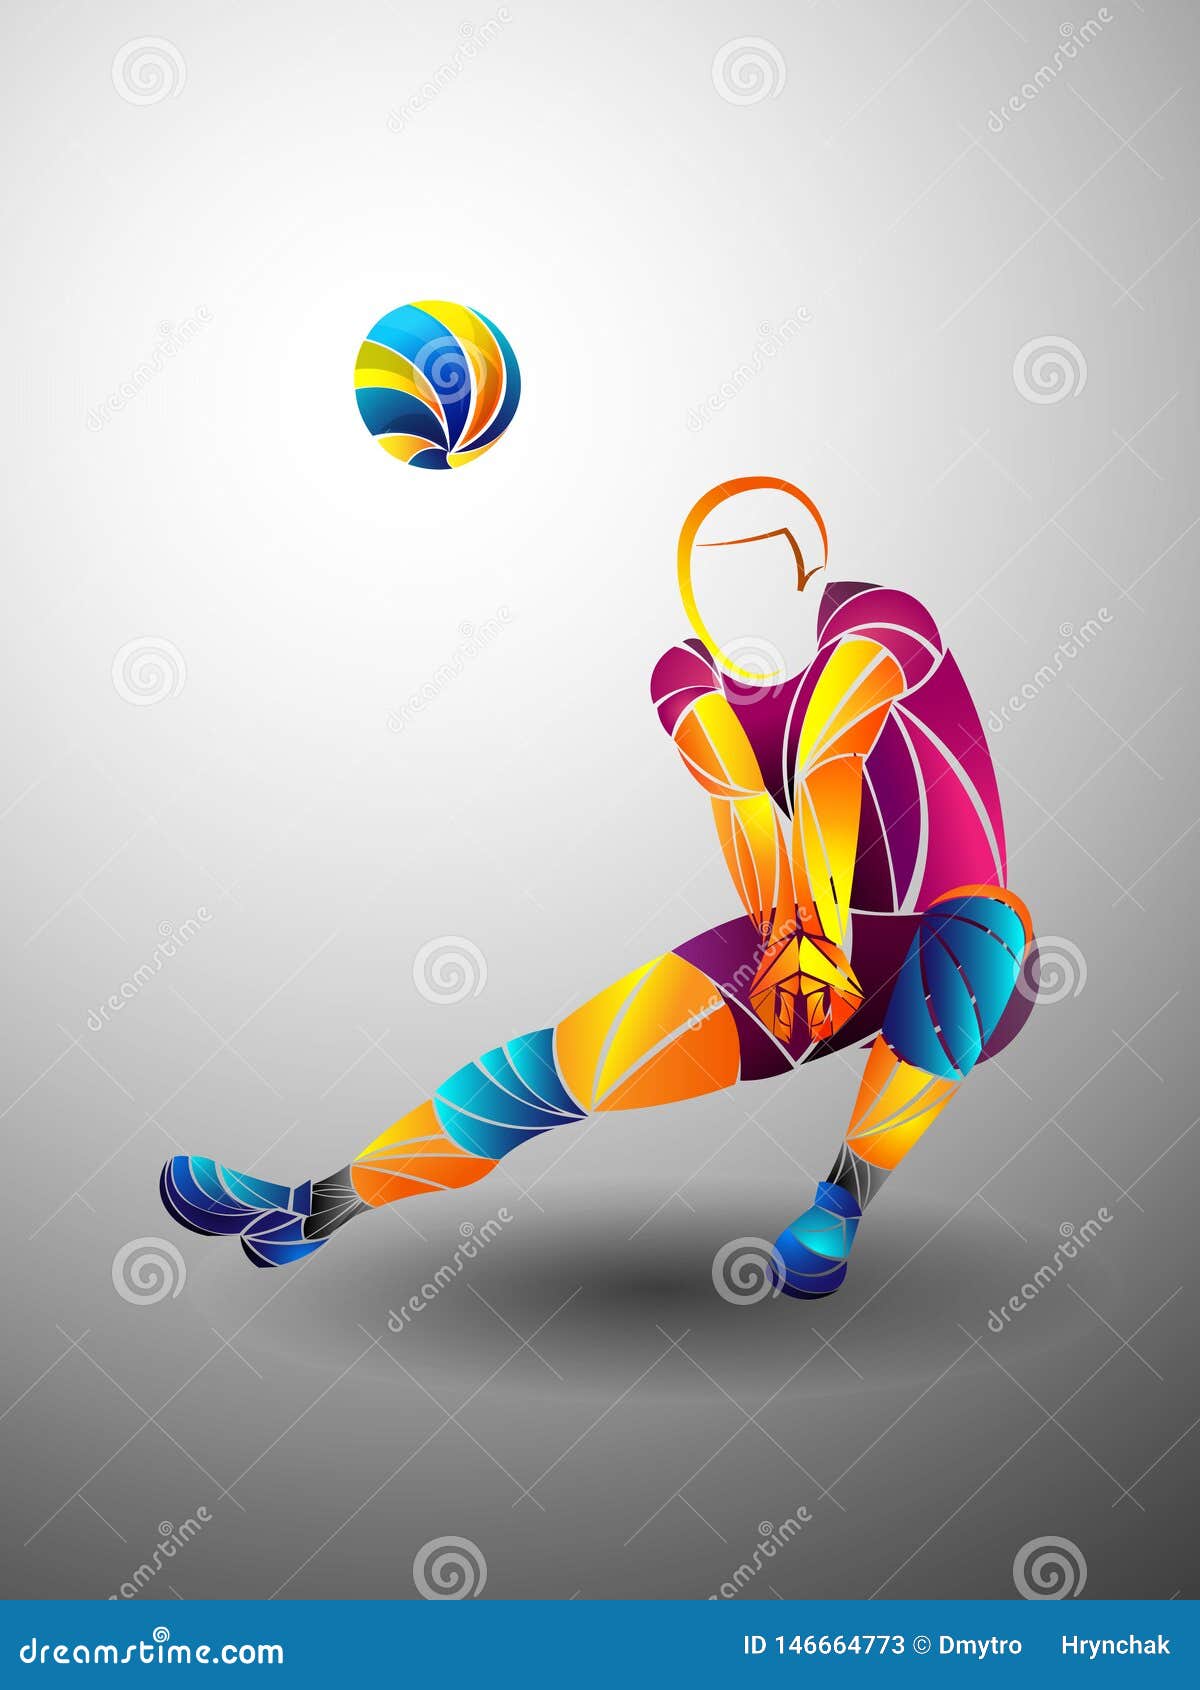 international volleyball live